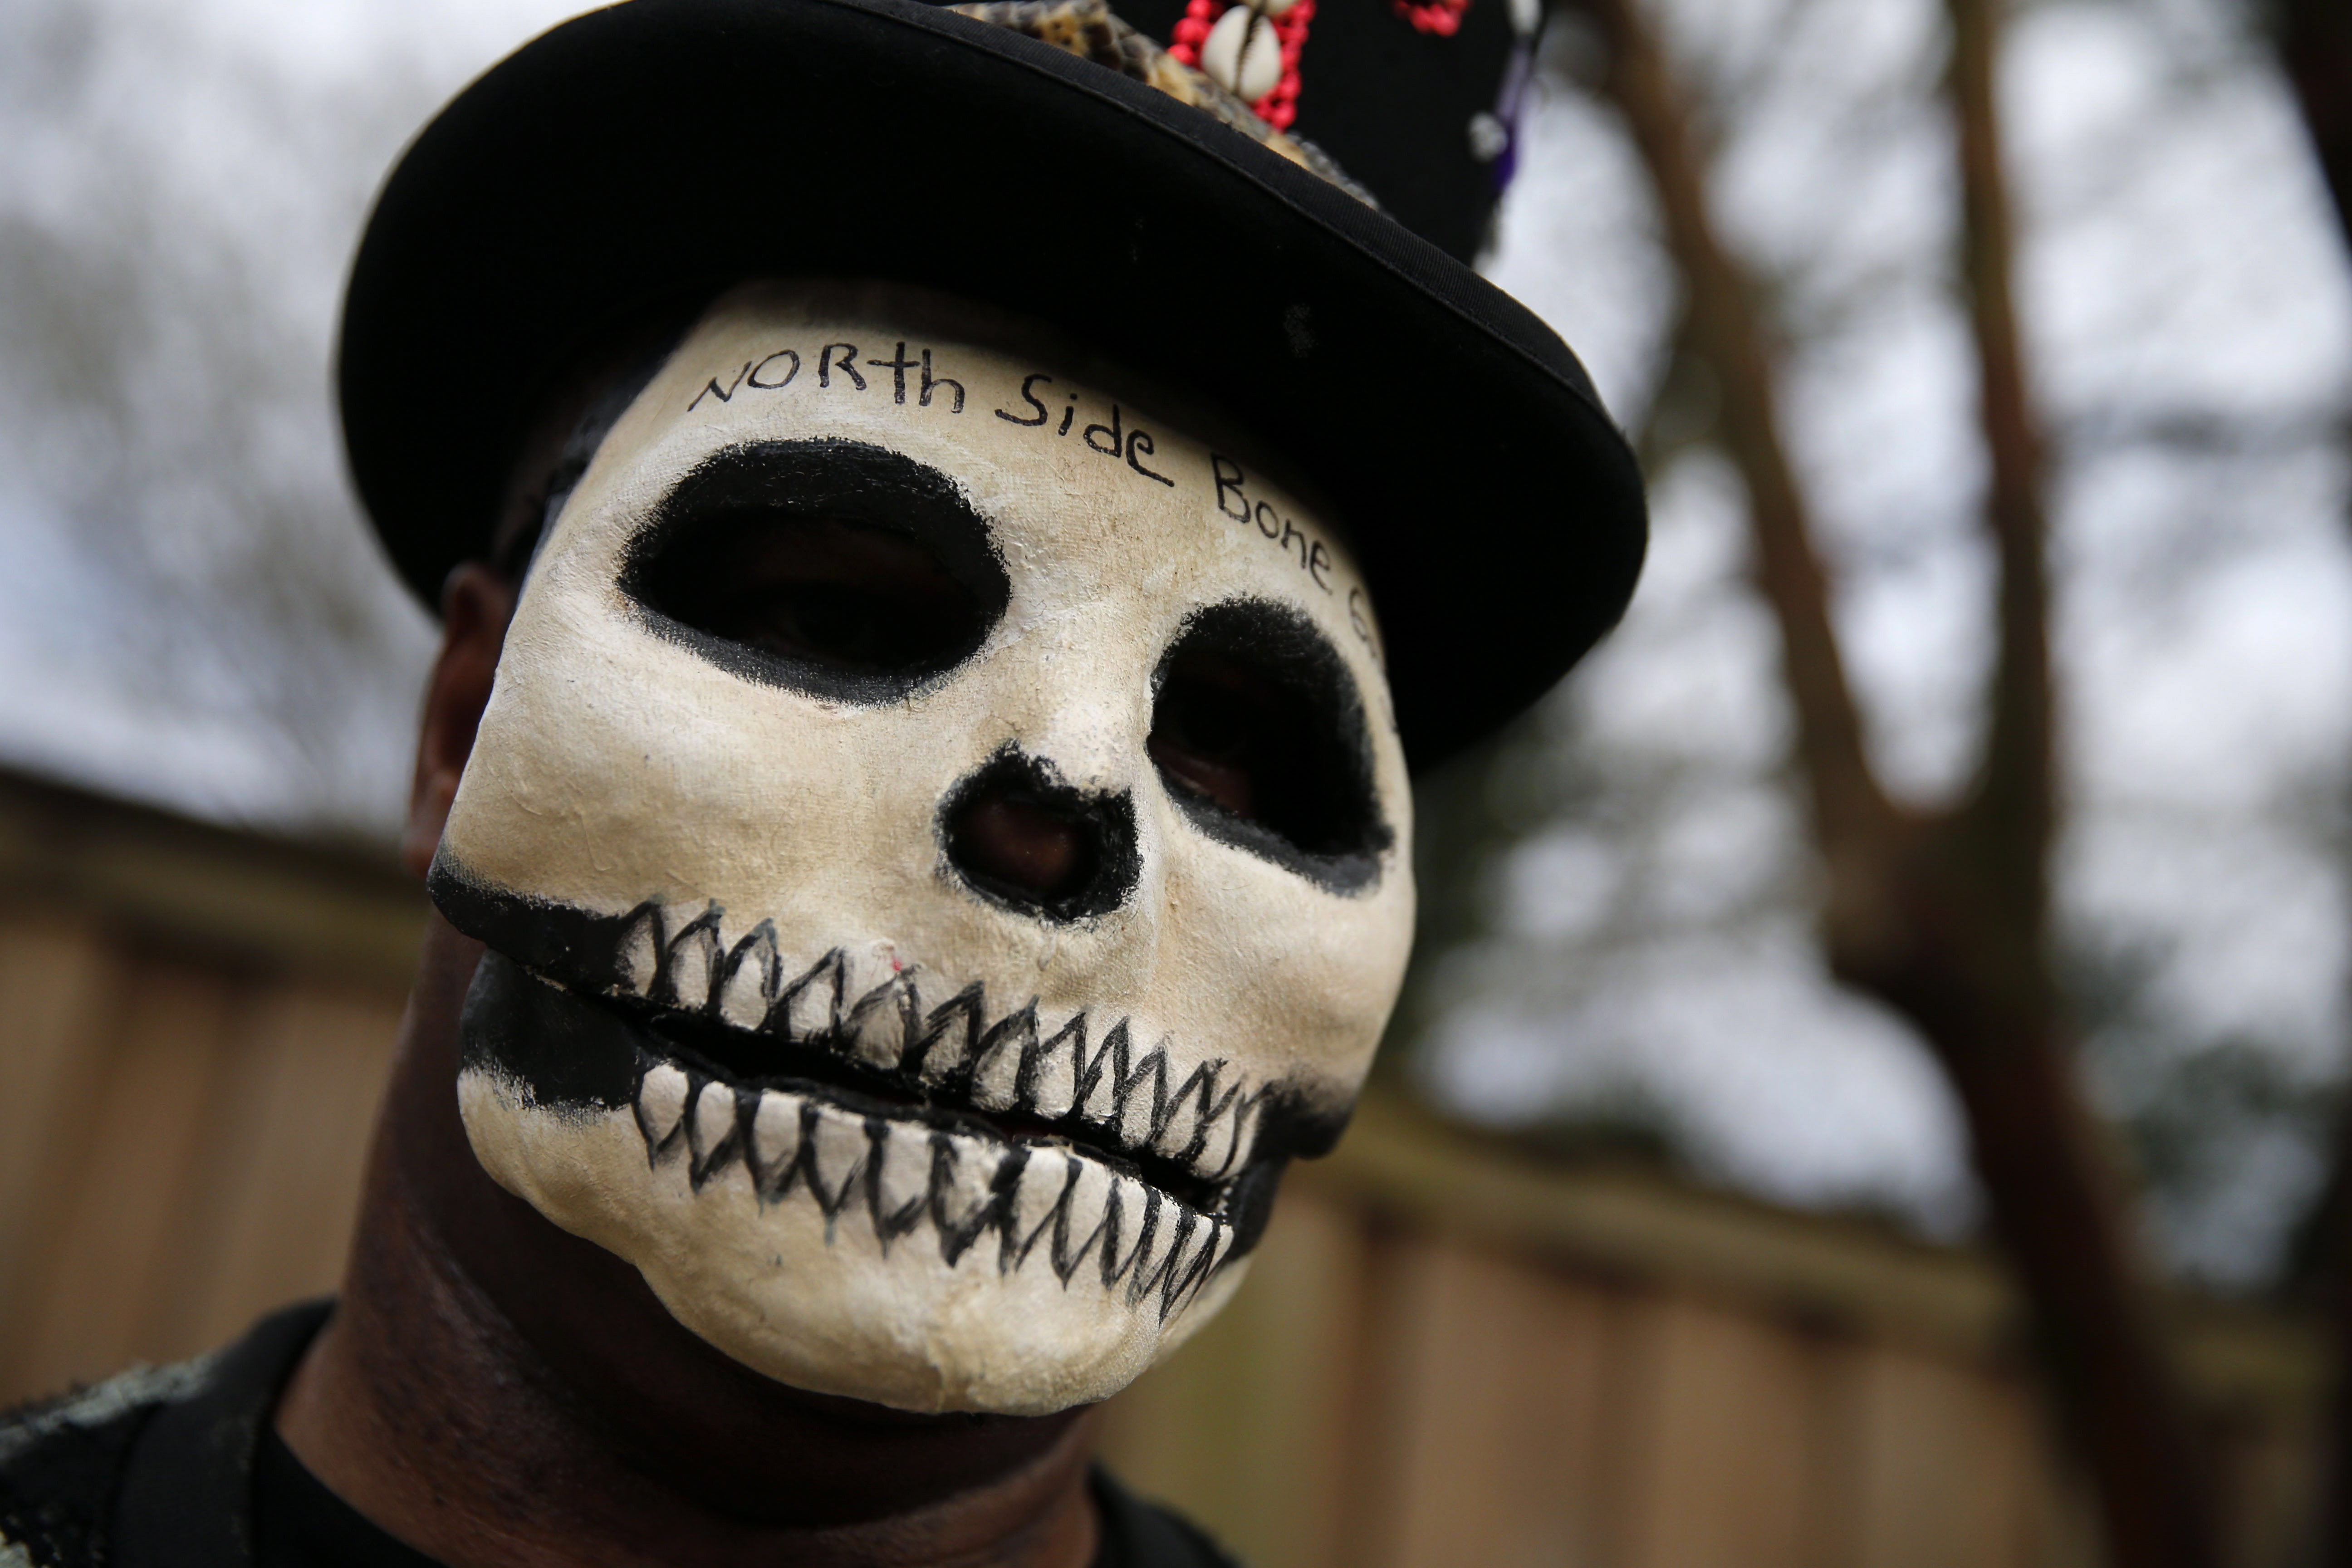 The North Side Skull & Bone Gang